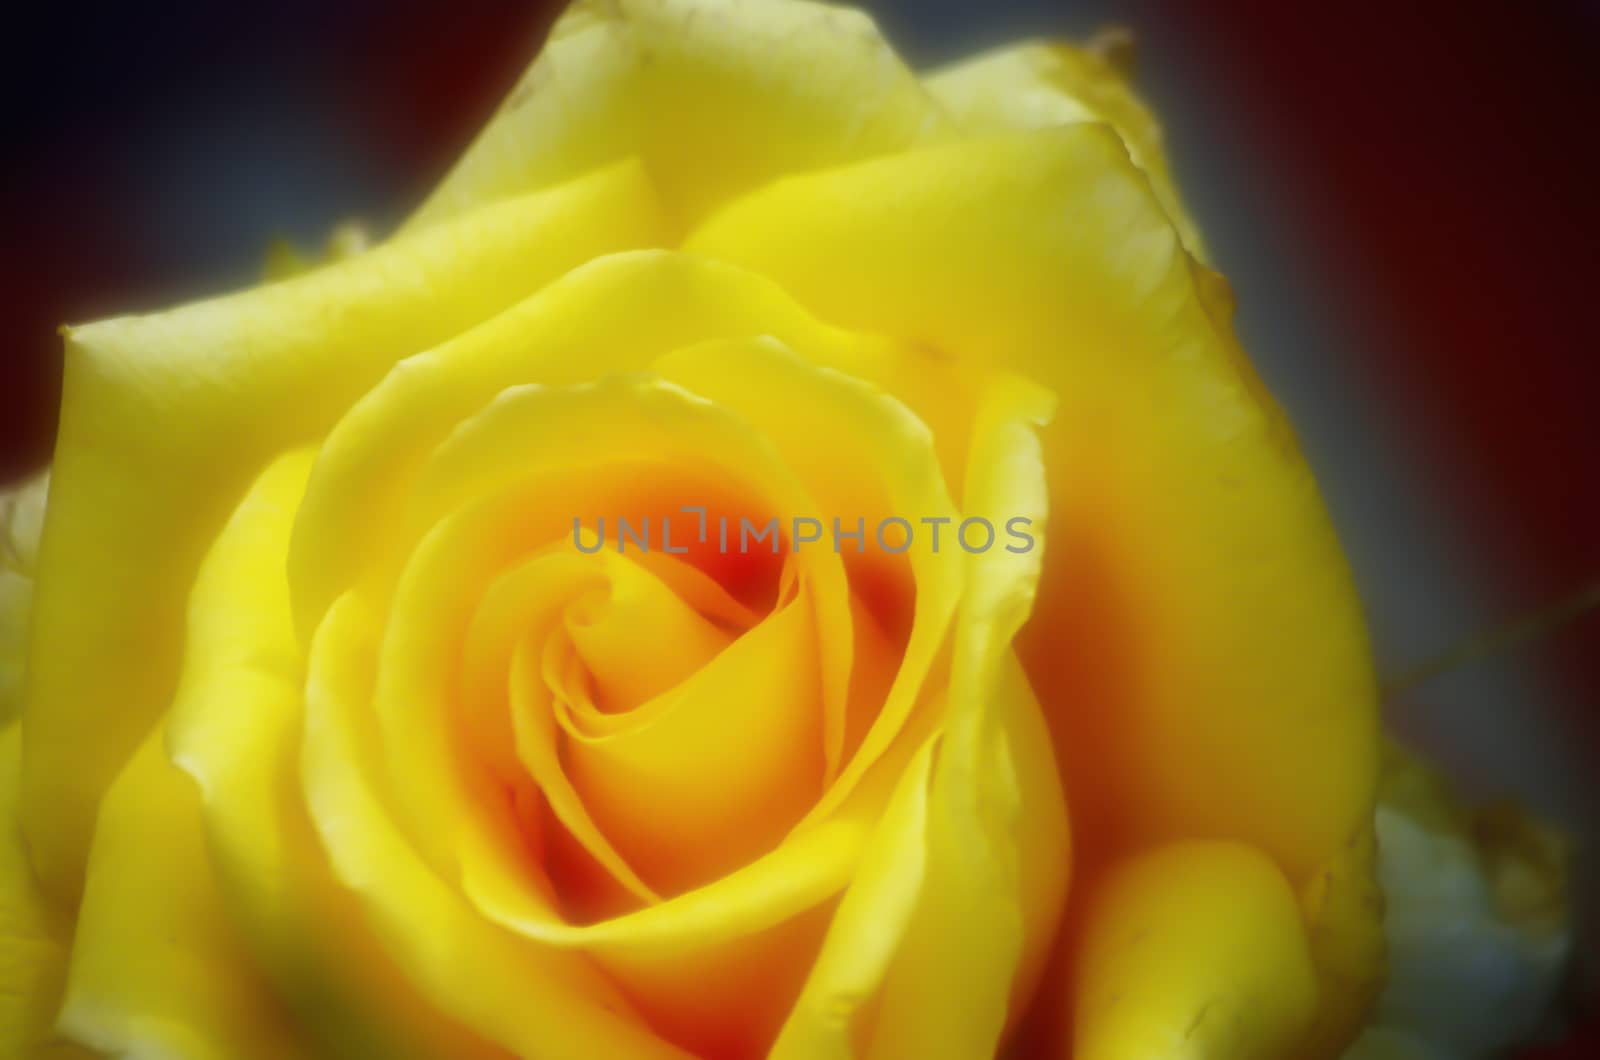 Yellow rose with orton effect by bpardofotografia